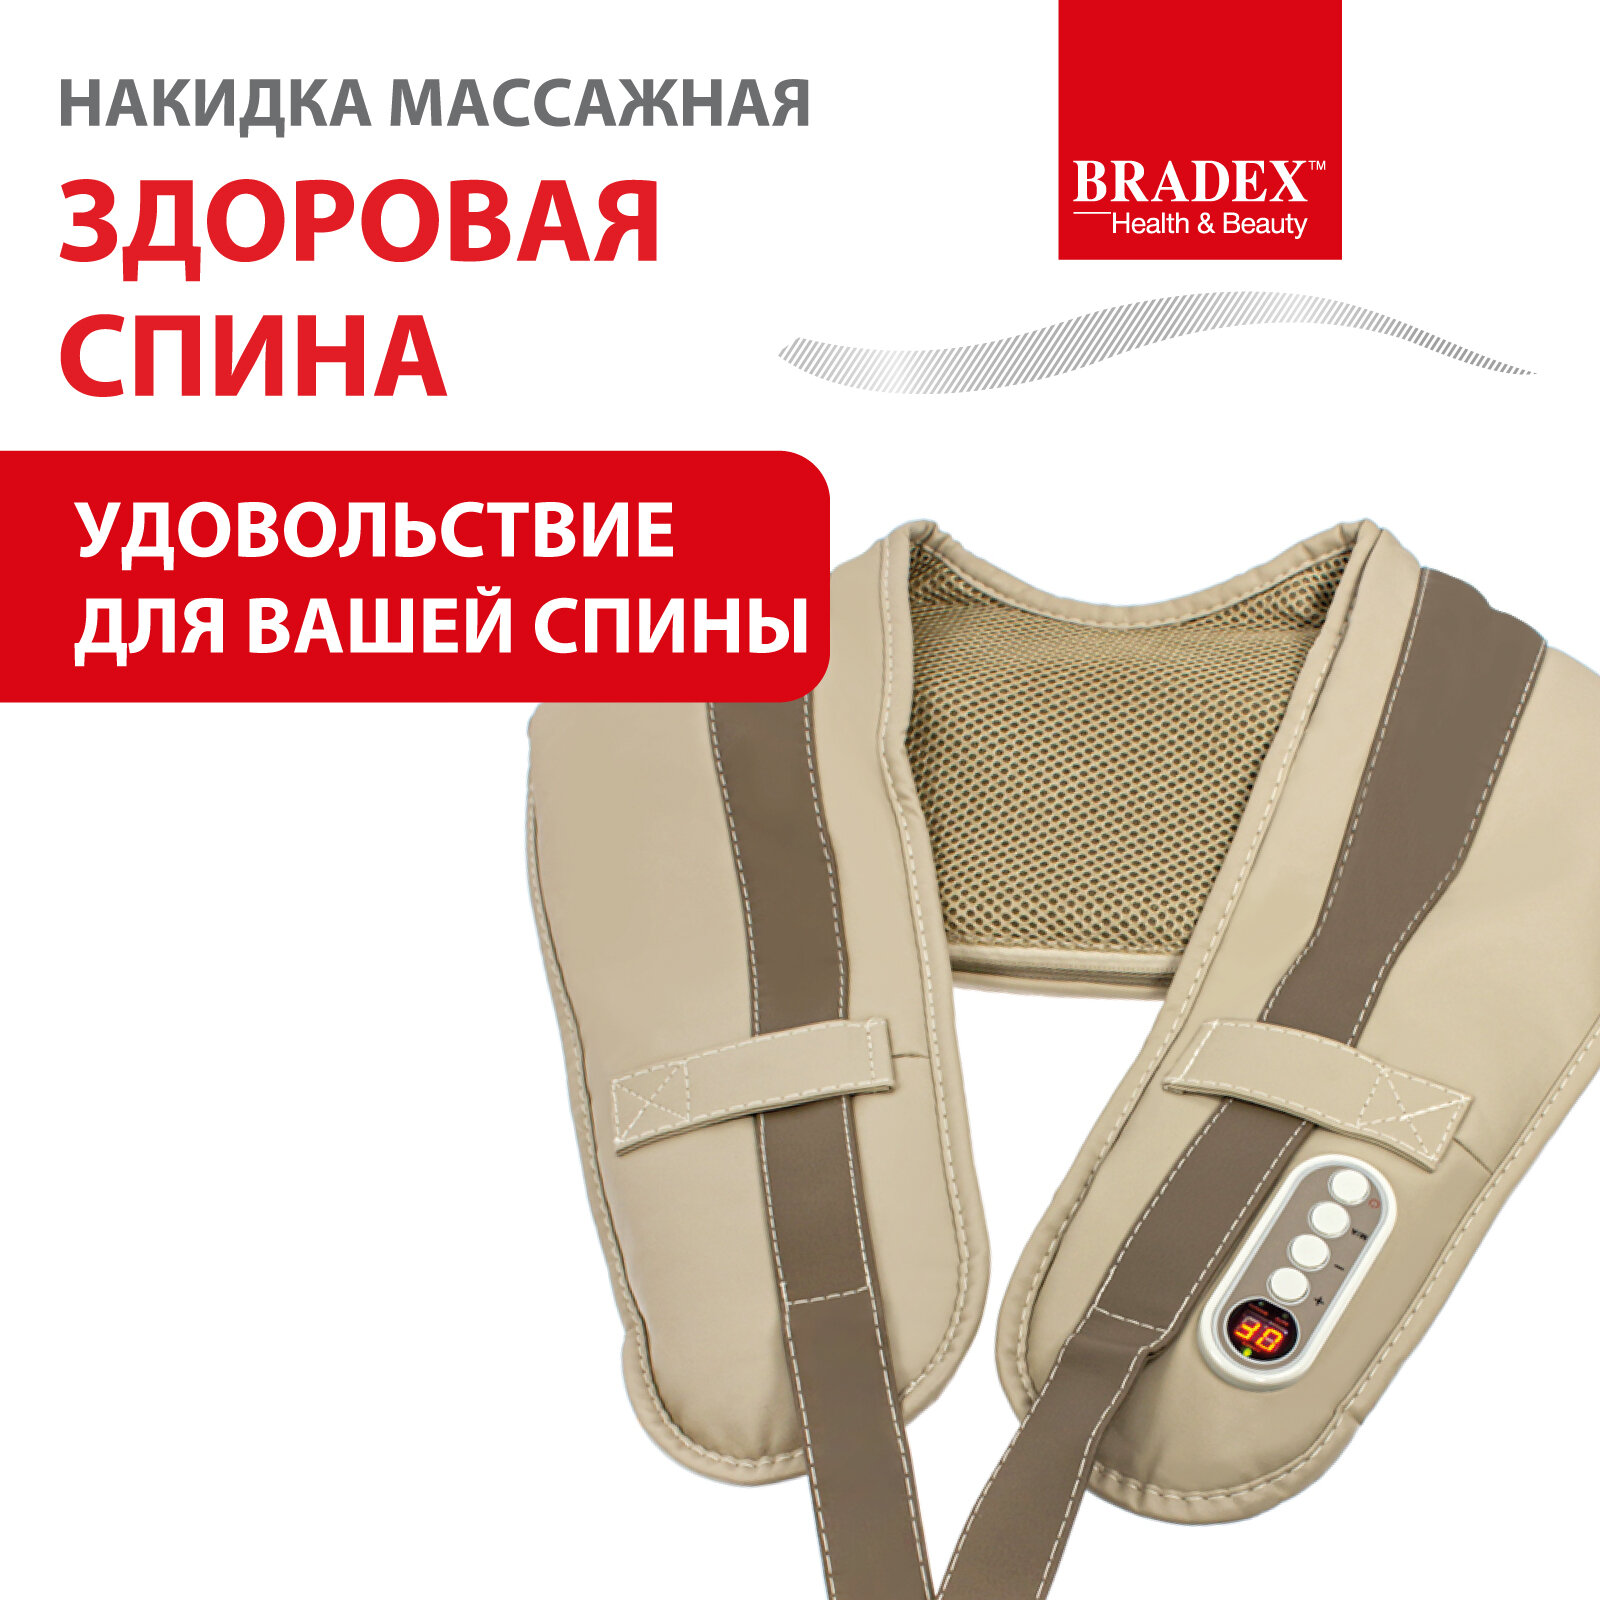 Вибрационный массажер для тела BRADEX Здоровая спина KZ 0096